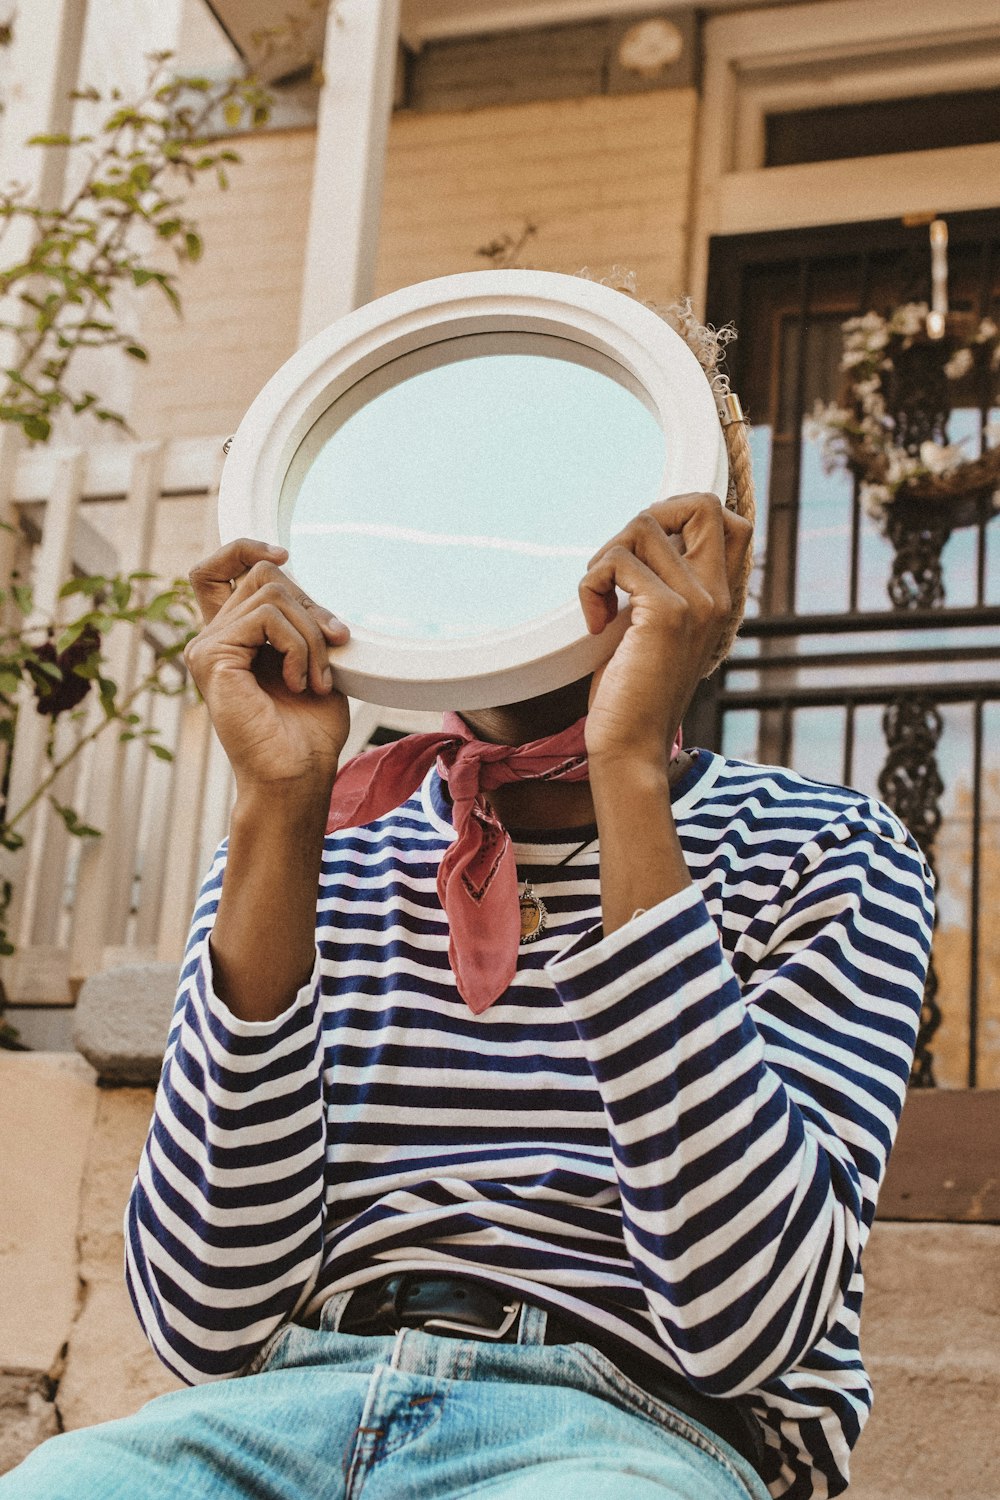 Persona con camisa a rayas sosteniendo un espejo redondo